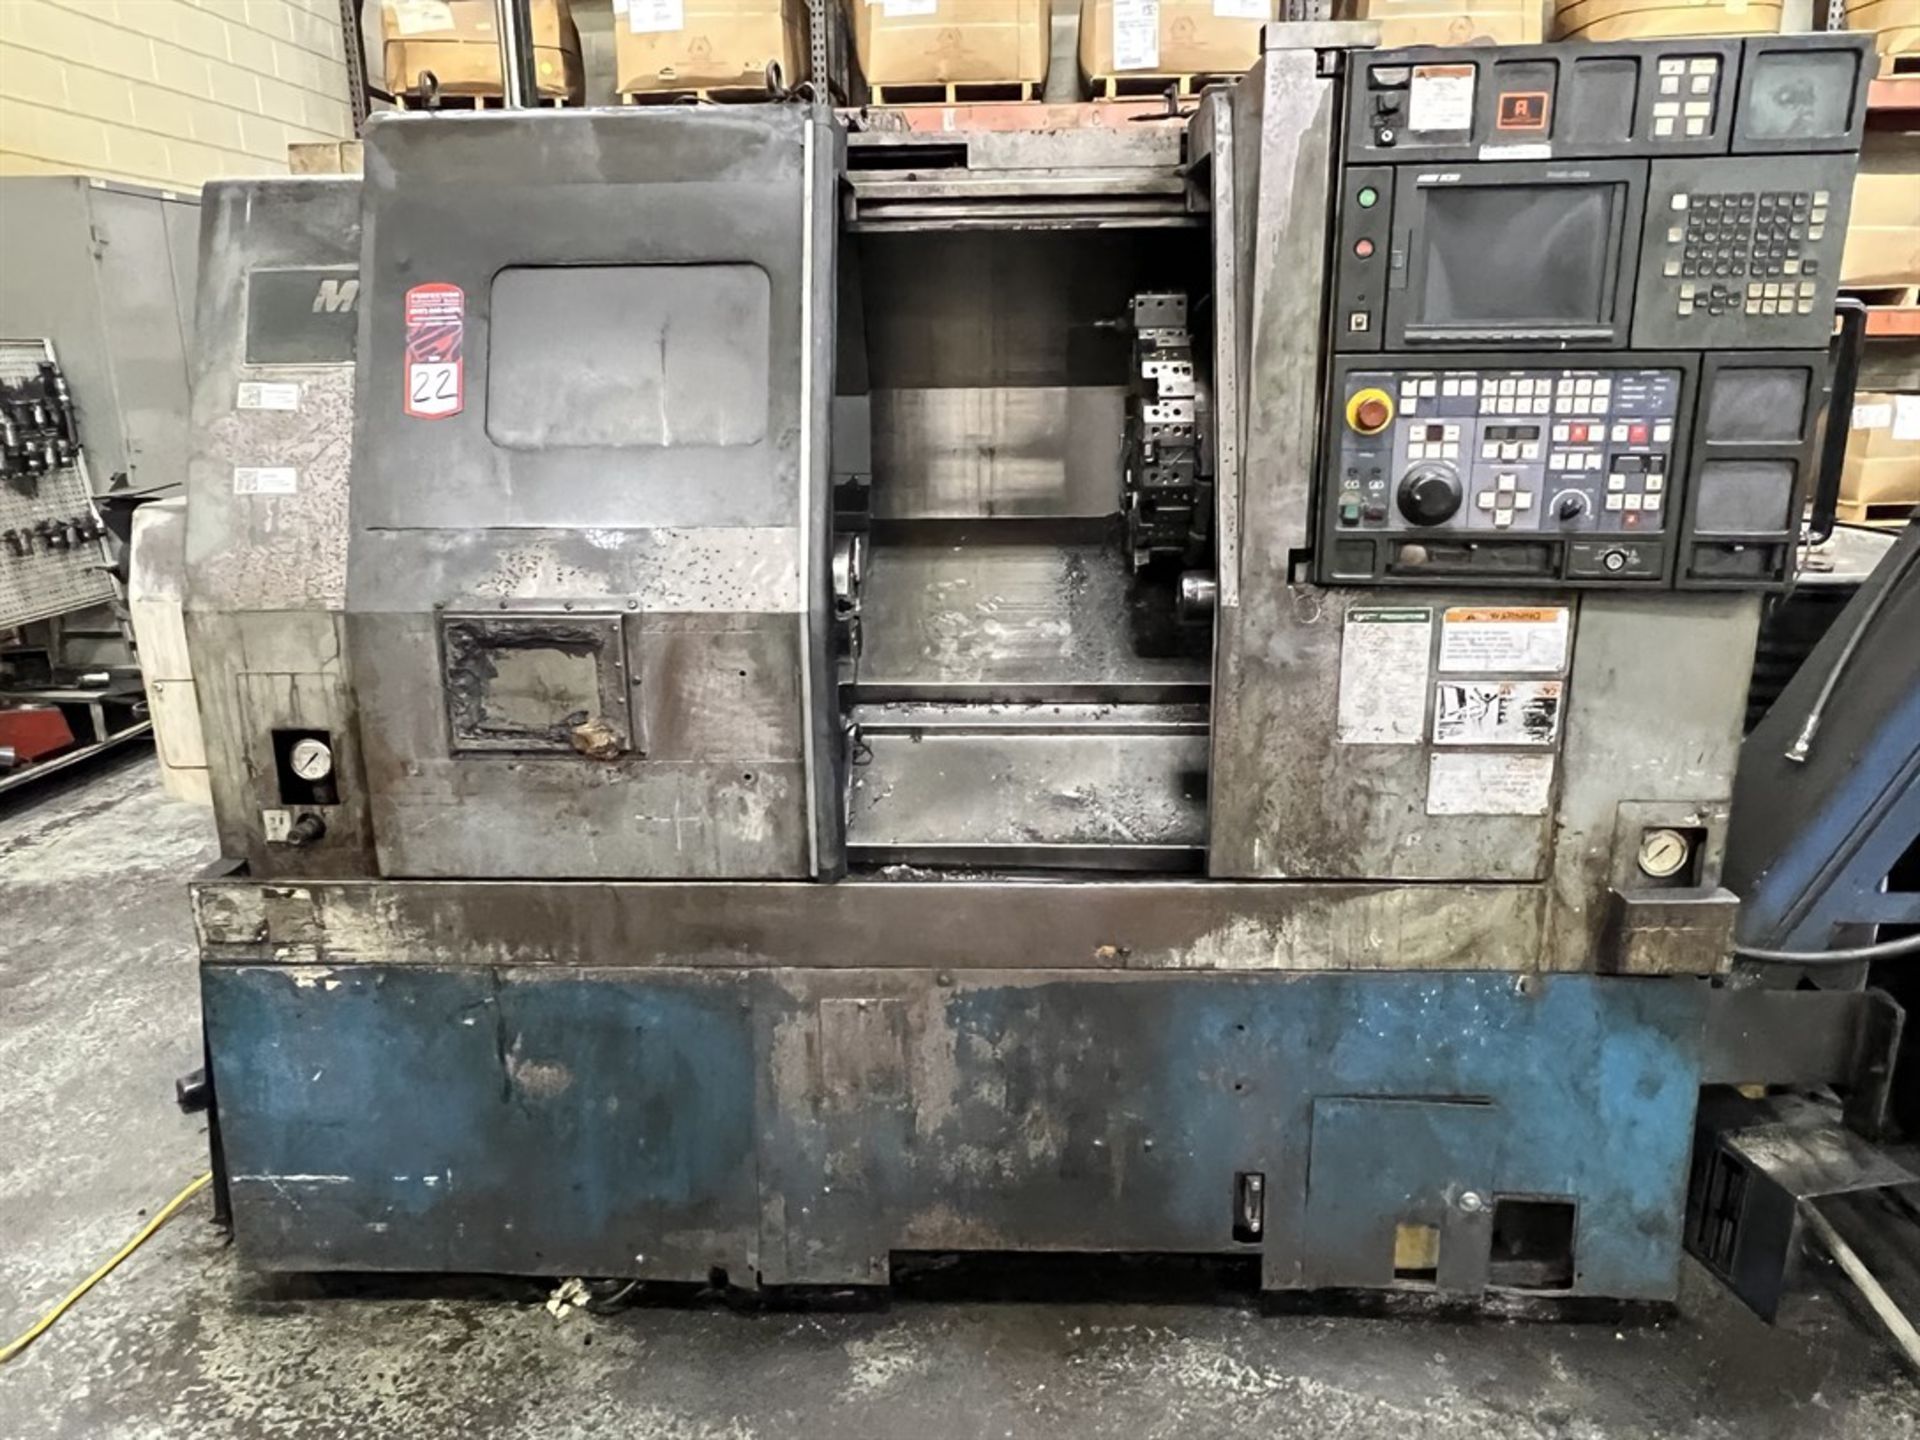 MORI SEIKI SL-200 CNC Turning Center, s/n 884, MSC-500 Control, (Parts Machine) (A rigging and